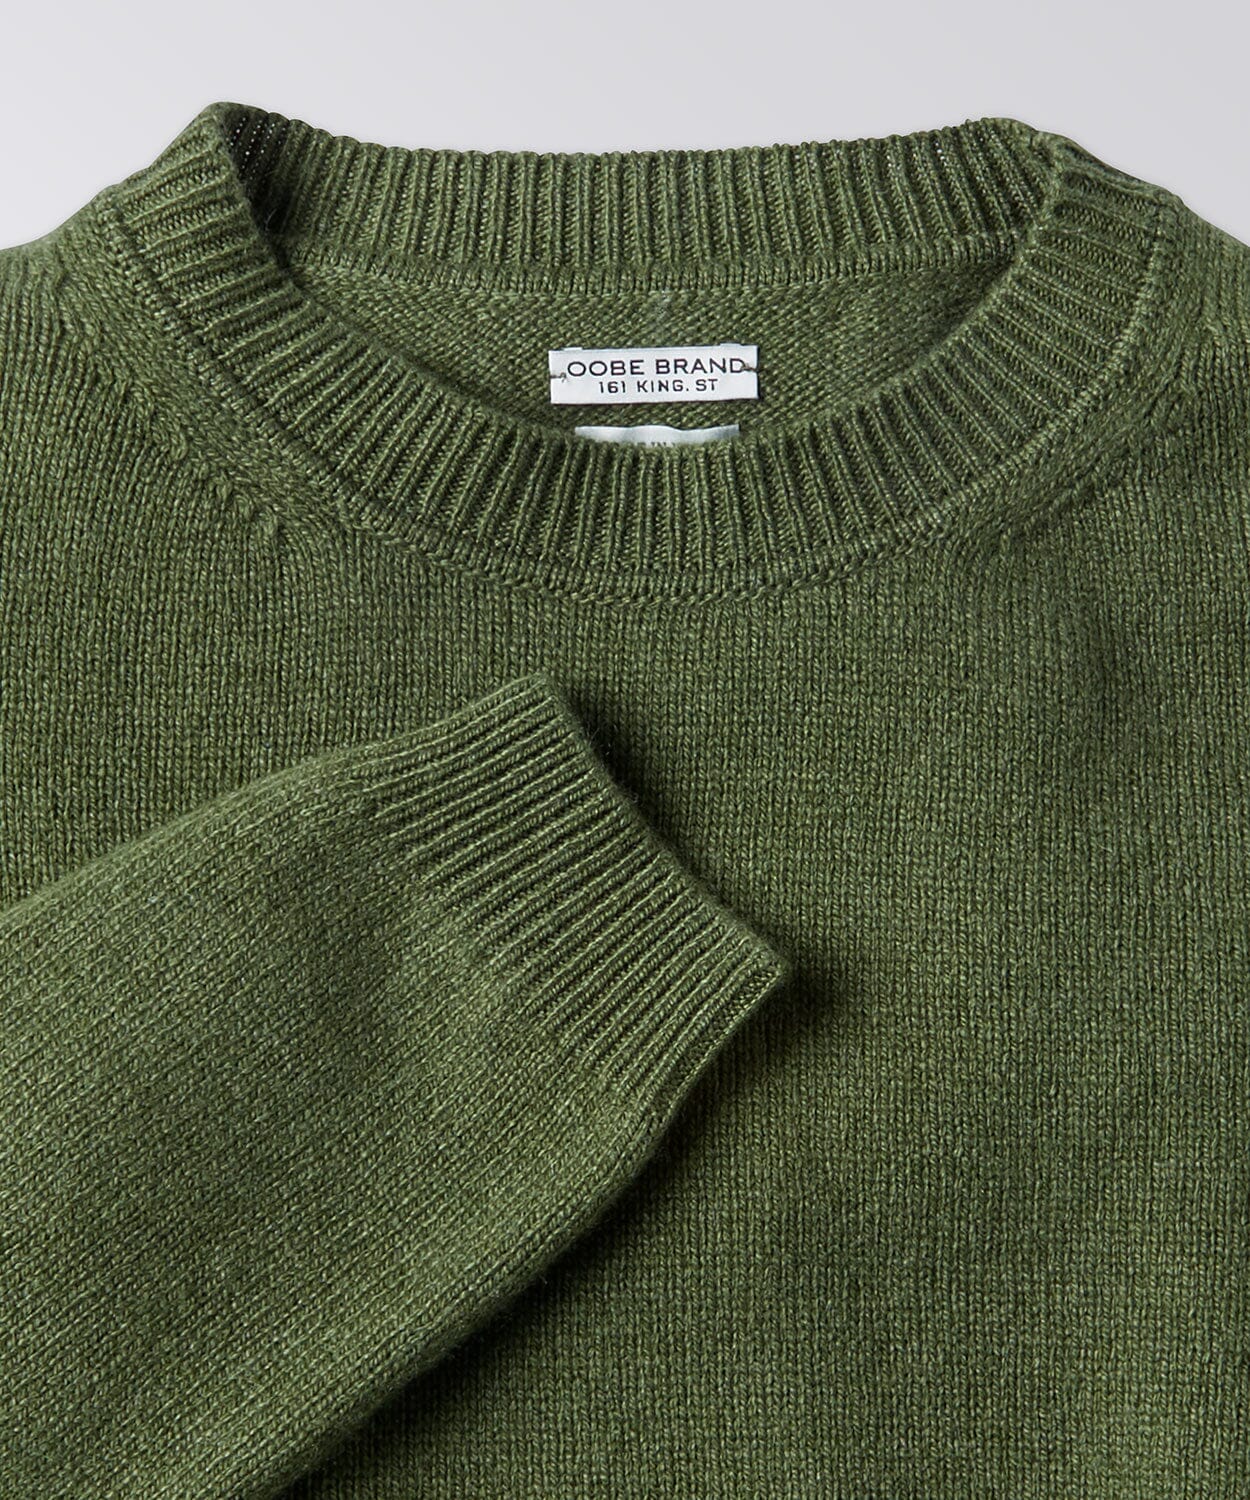 Samson Sweater Sweaters OOBE BRAND 